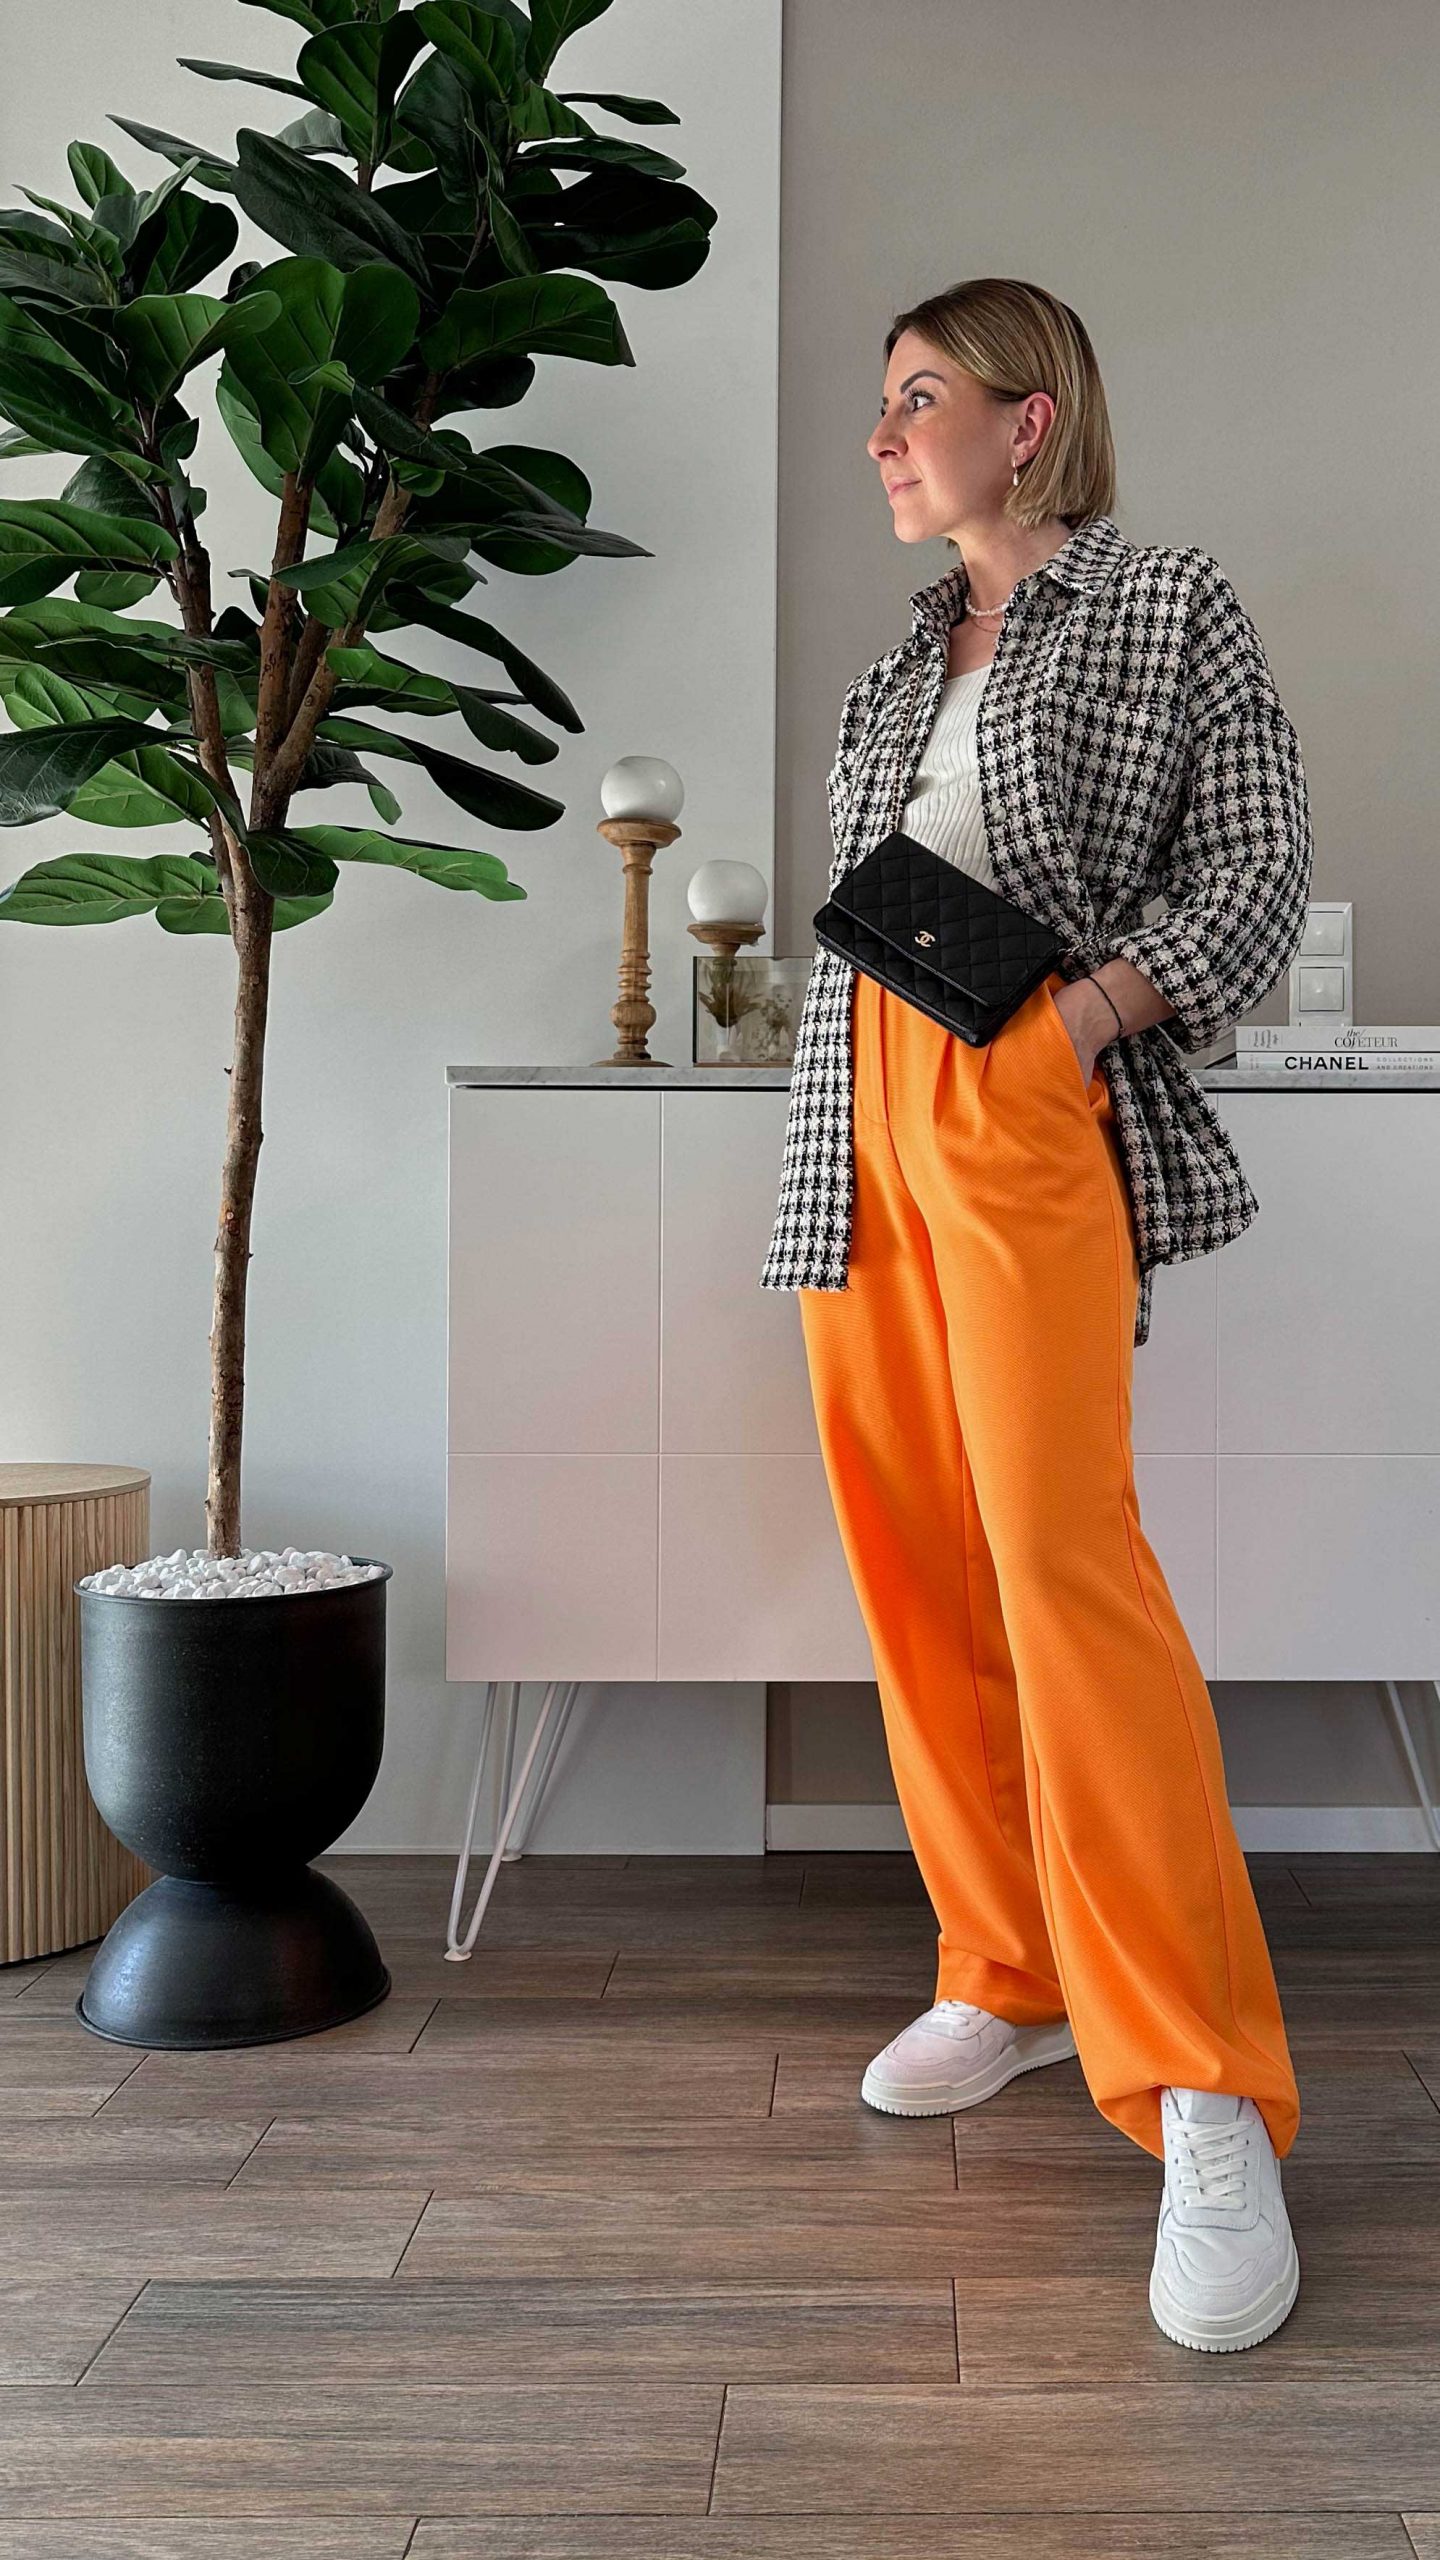 Basic-Casual Frühlingsoutfit mit oranger Palazzohose, weißen Copenhagen Sneakers und Jacke in Tweed-Optik. Mehr Frühlingstrends auf whoismocca.com